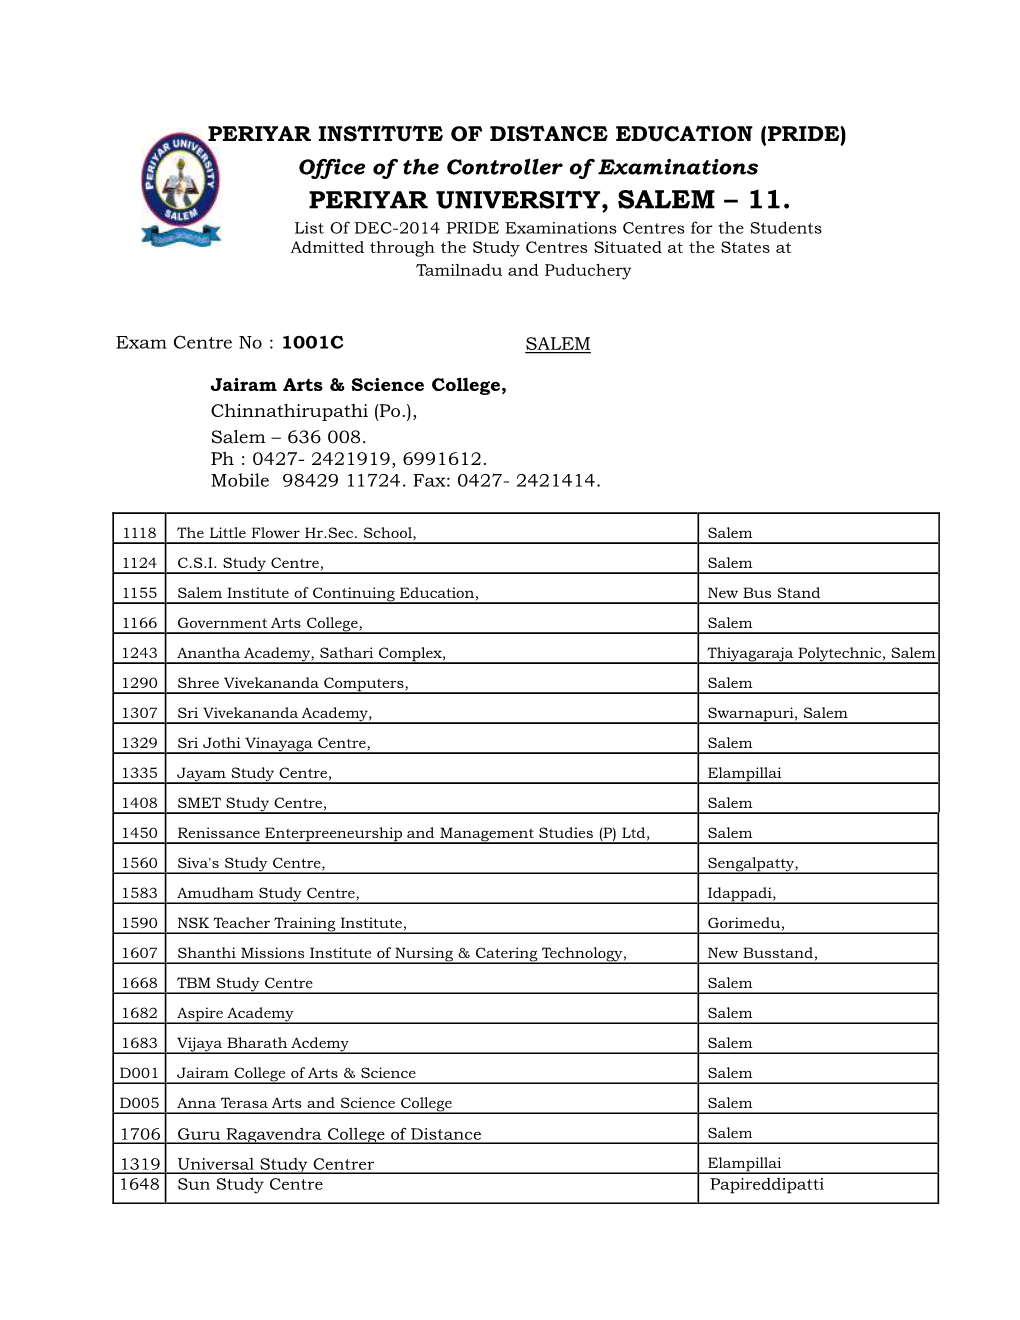 Periyar University, Salem – 11